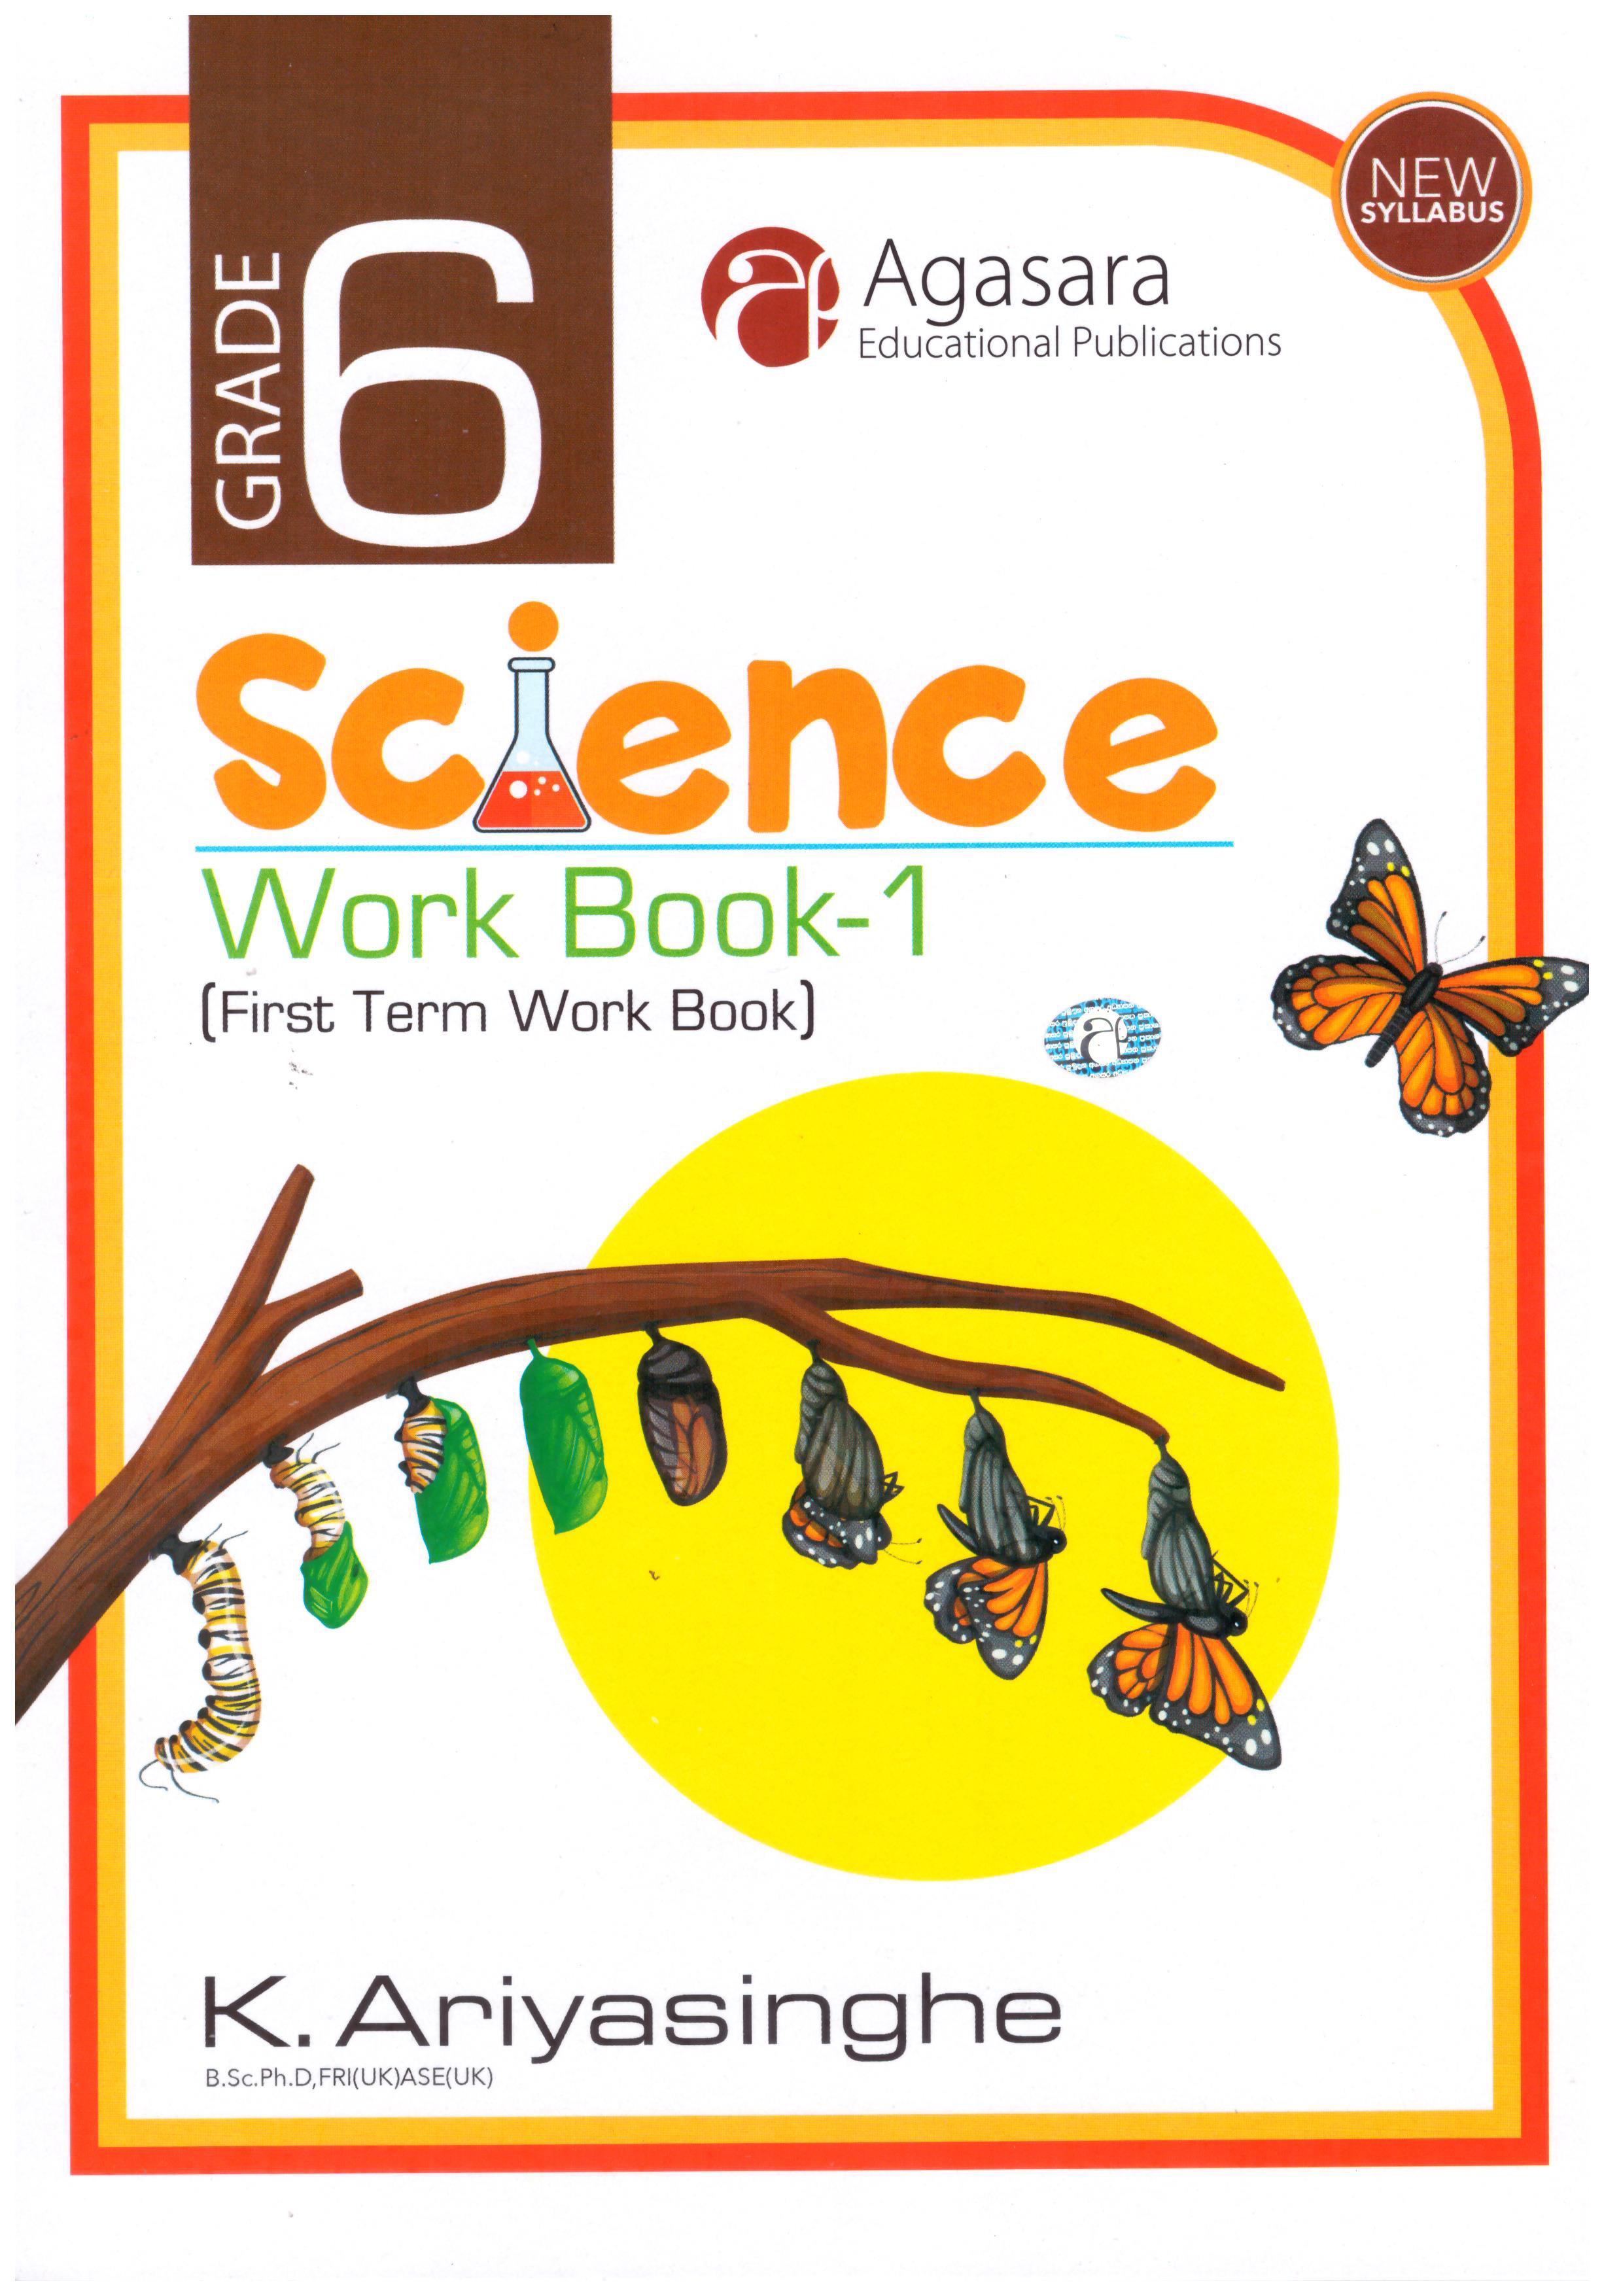 Grade 6 Science Work Book 1